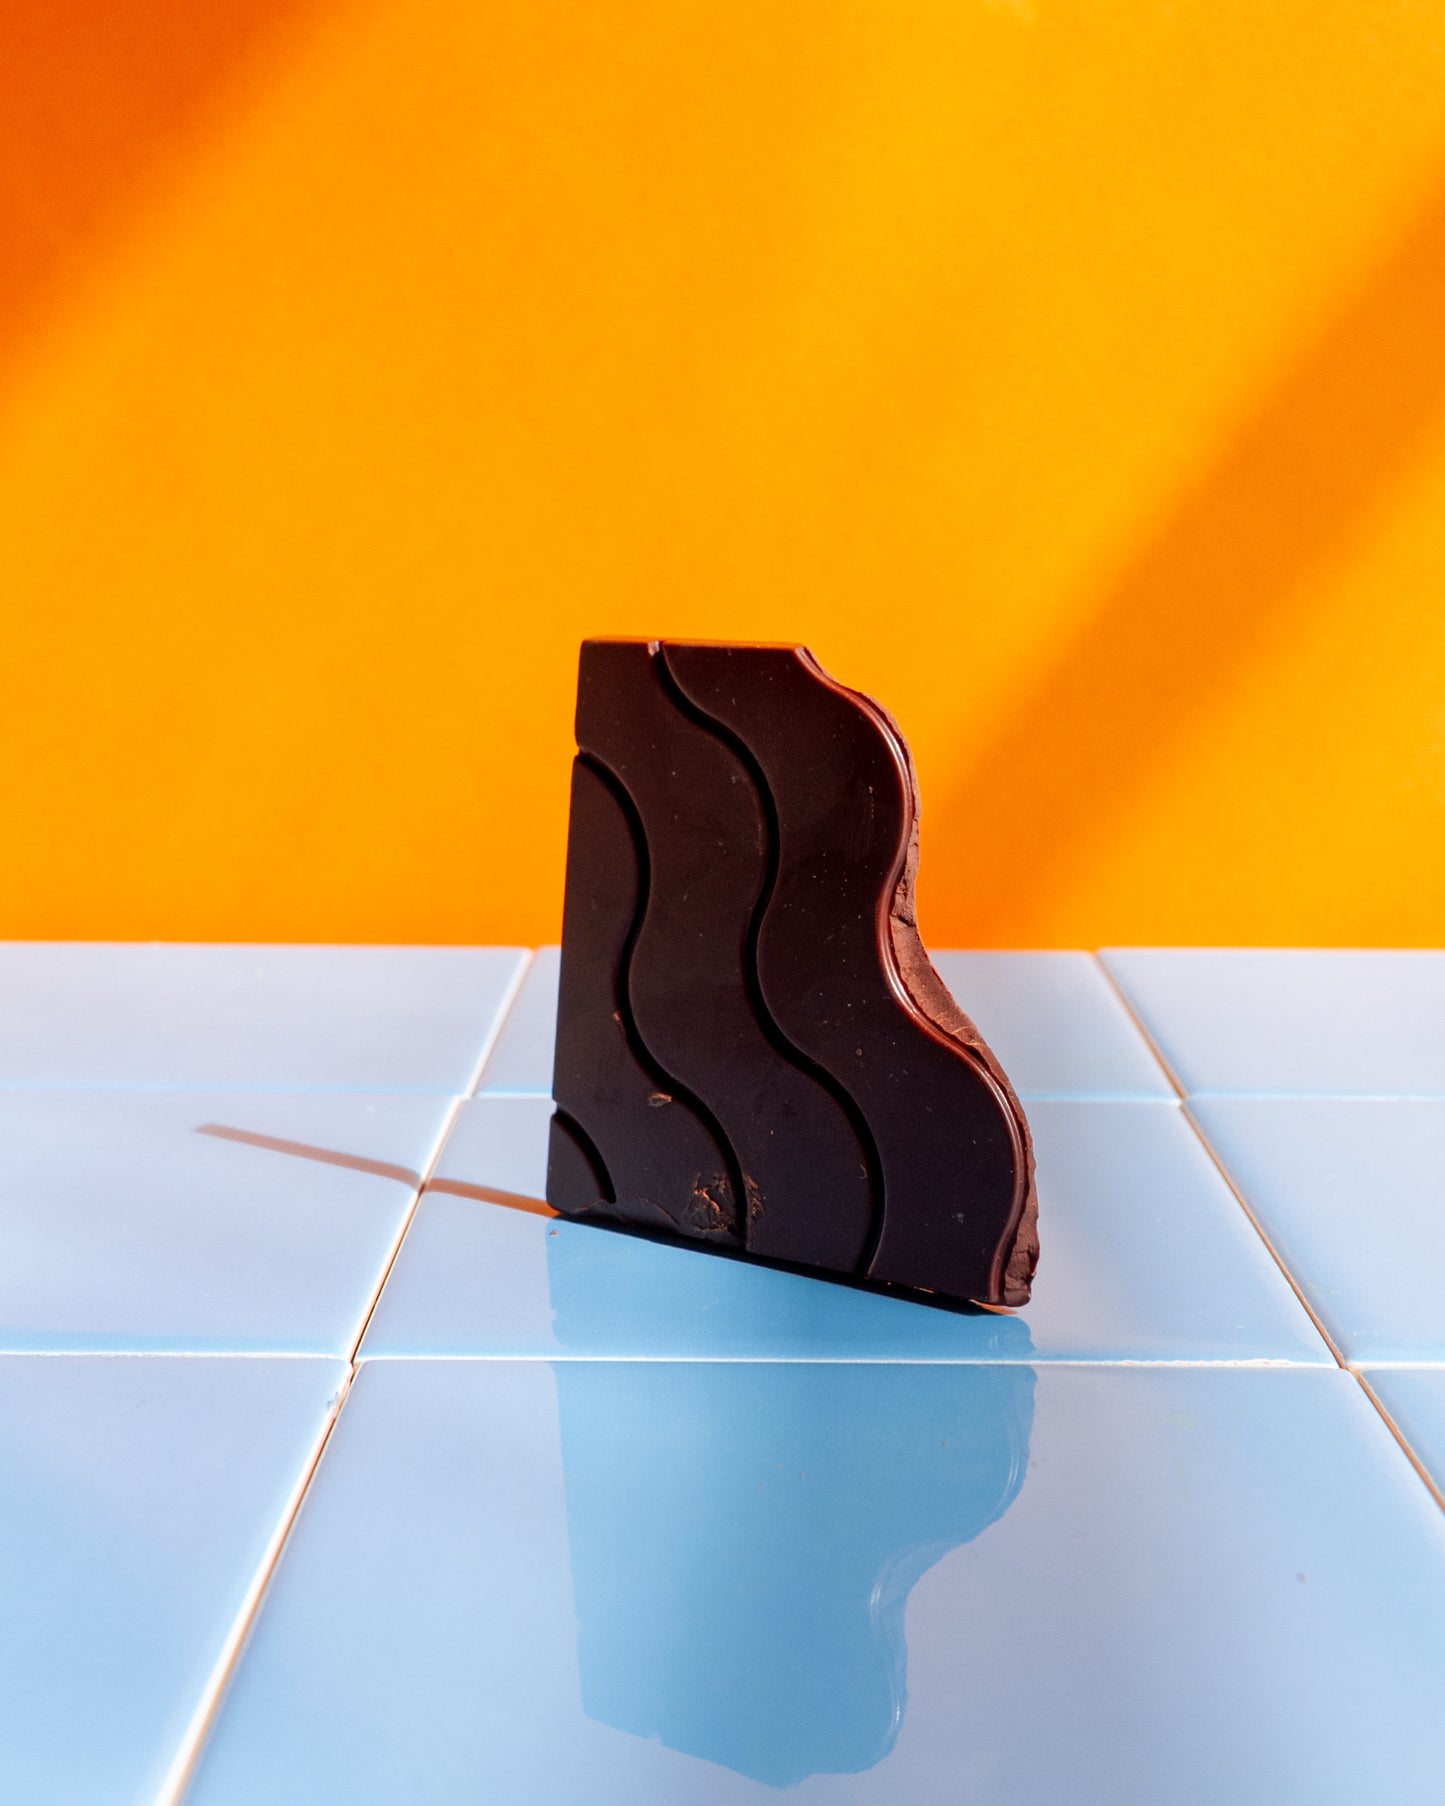 Tasty chocolate on yellow background, sky blue tile floor